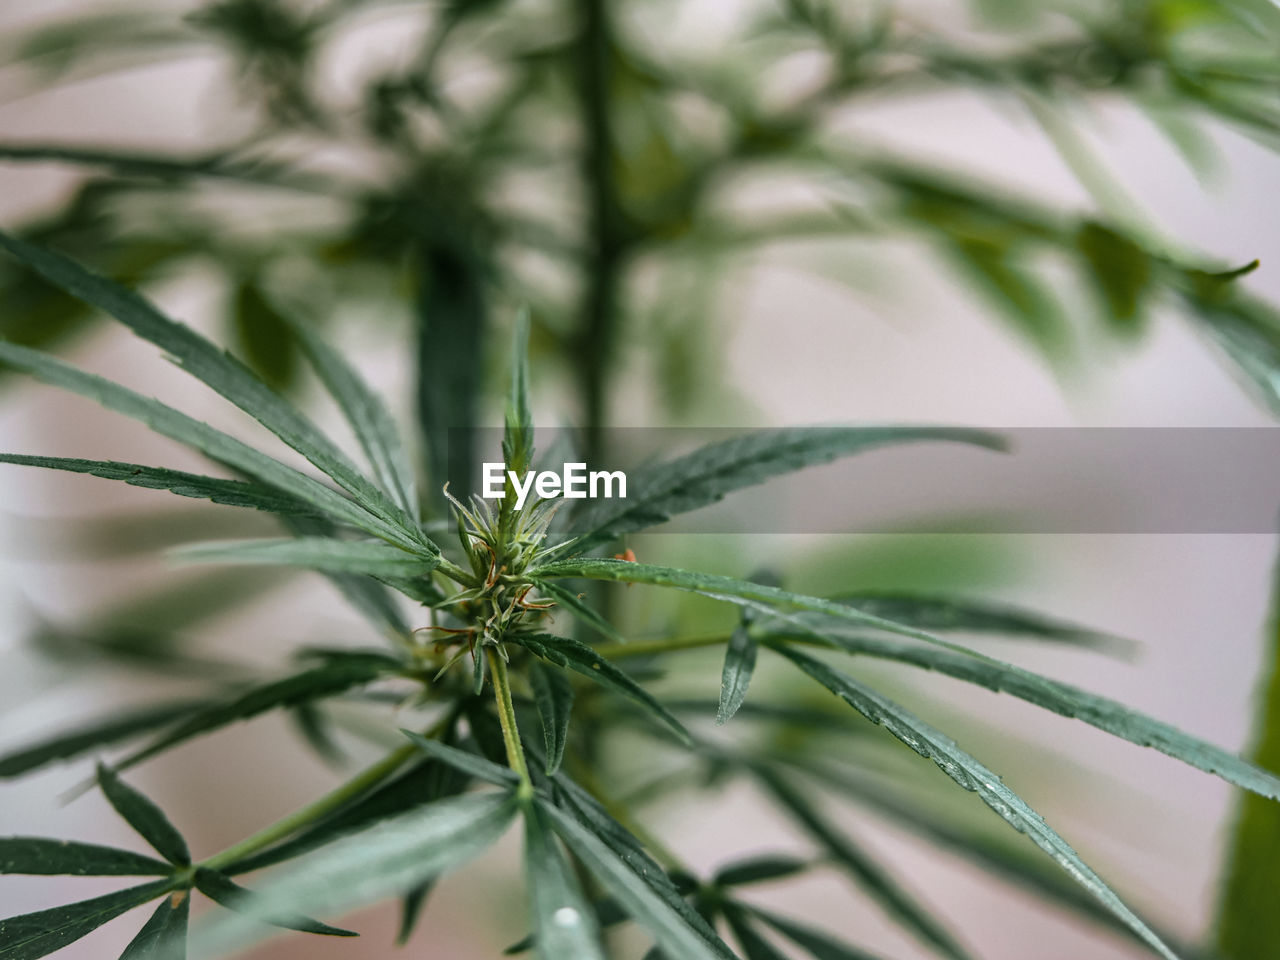 Green cannabis leaf close up